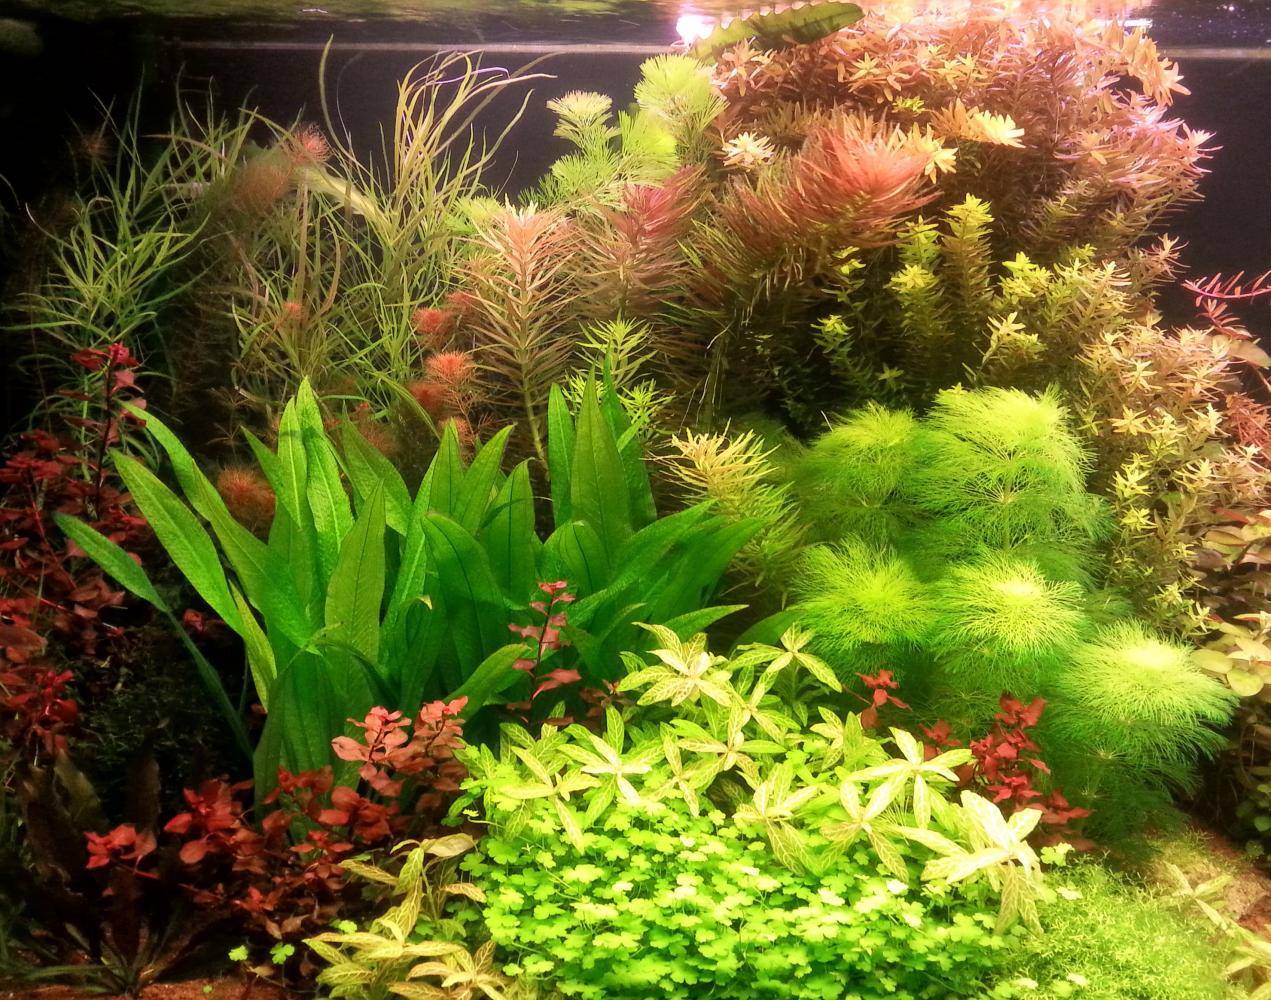 Растения в аквариум подходящие даже новичкам